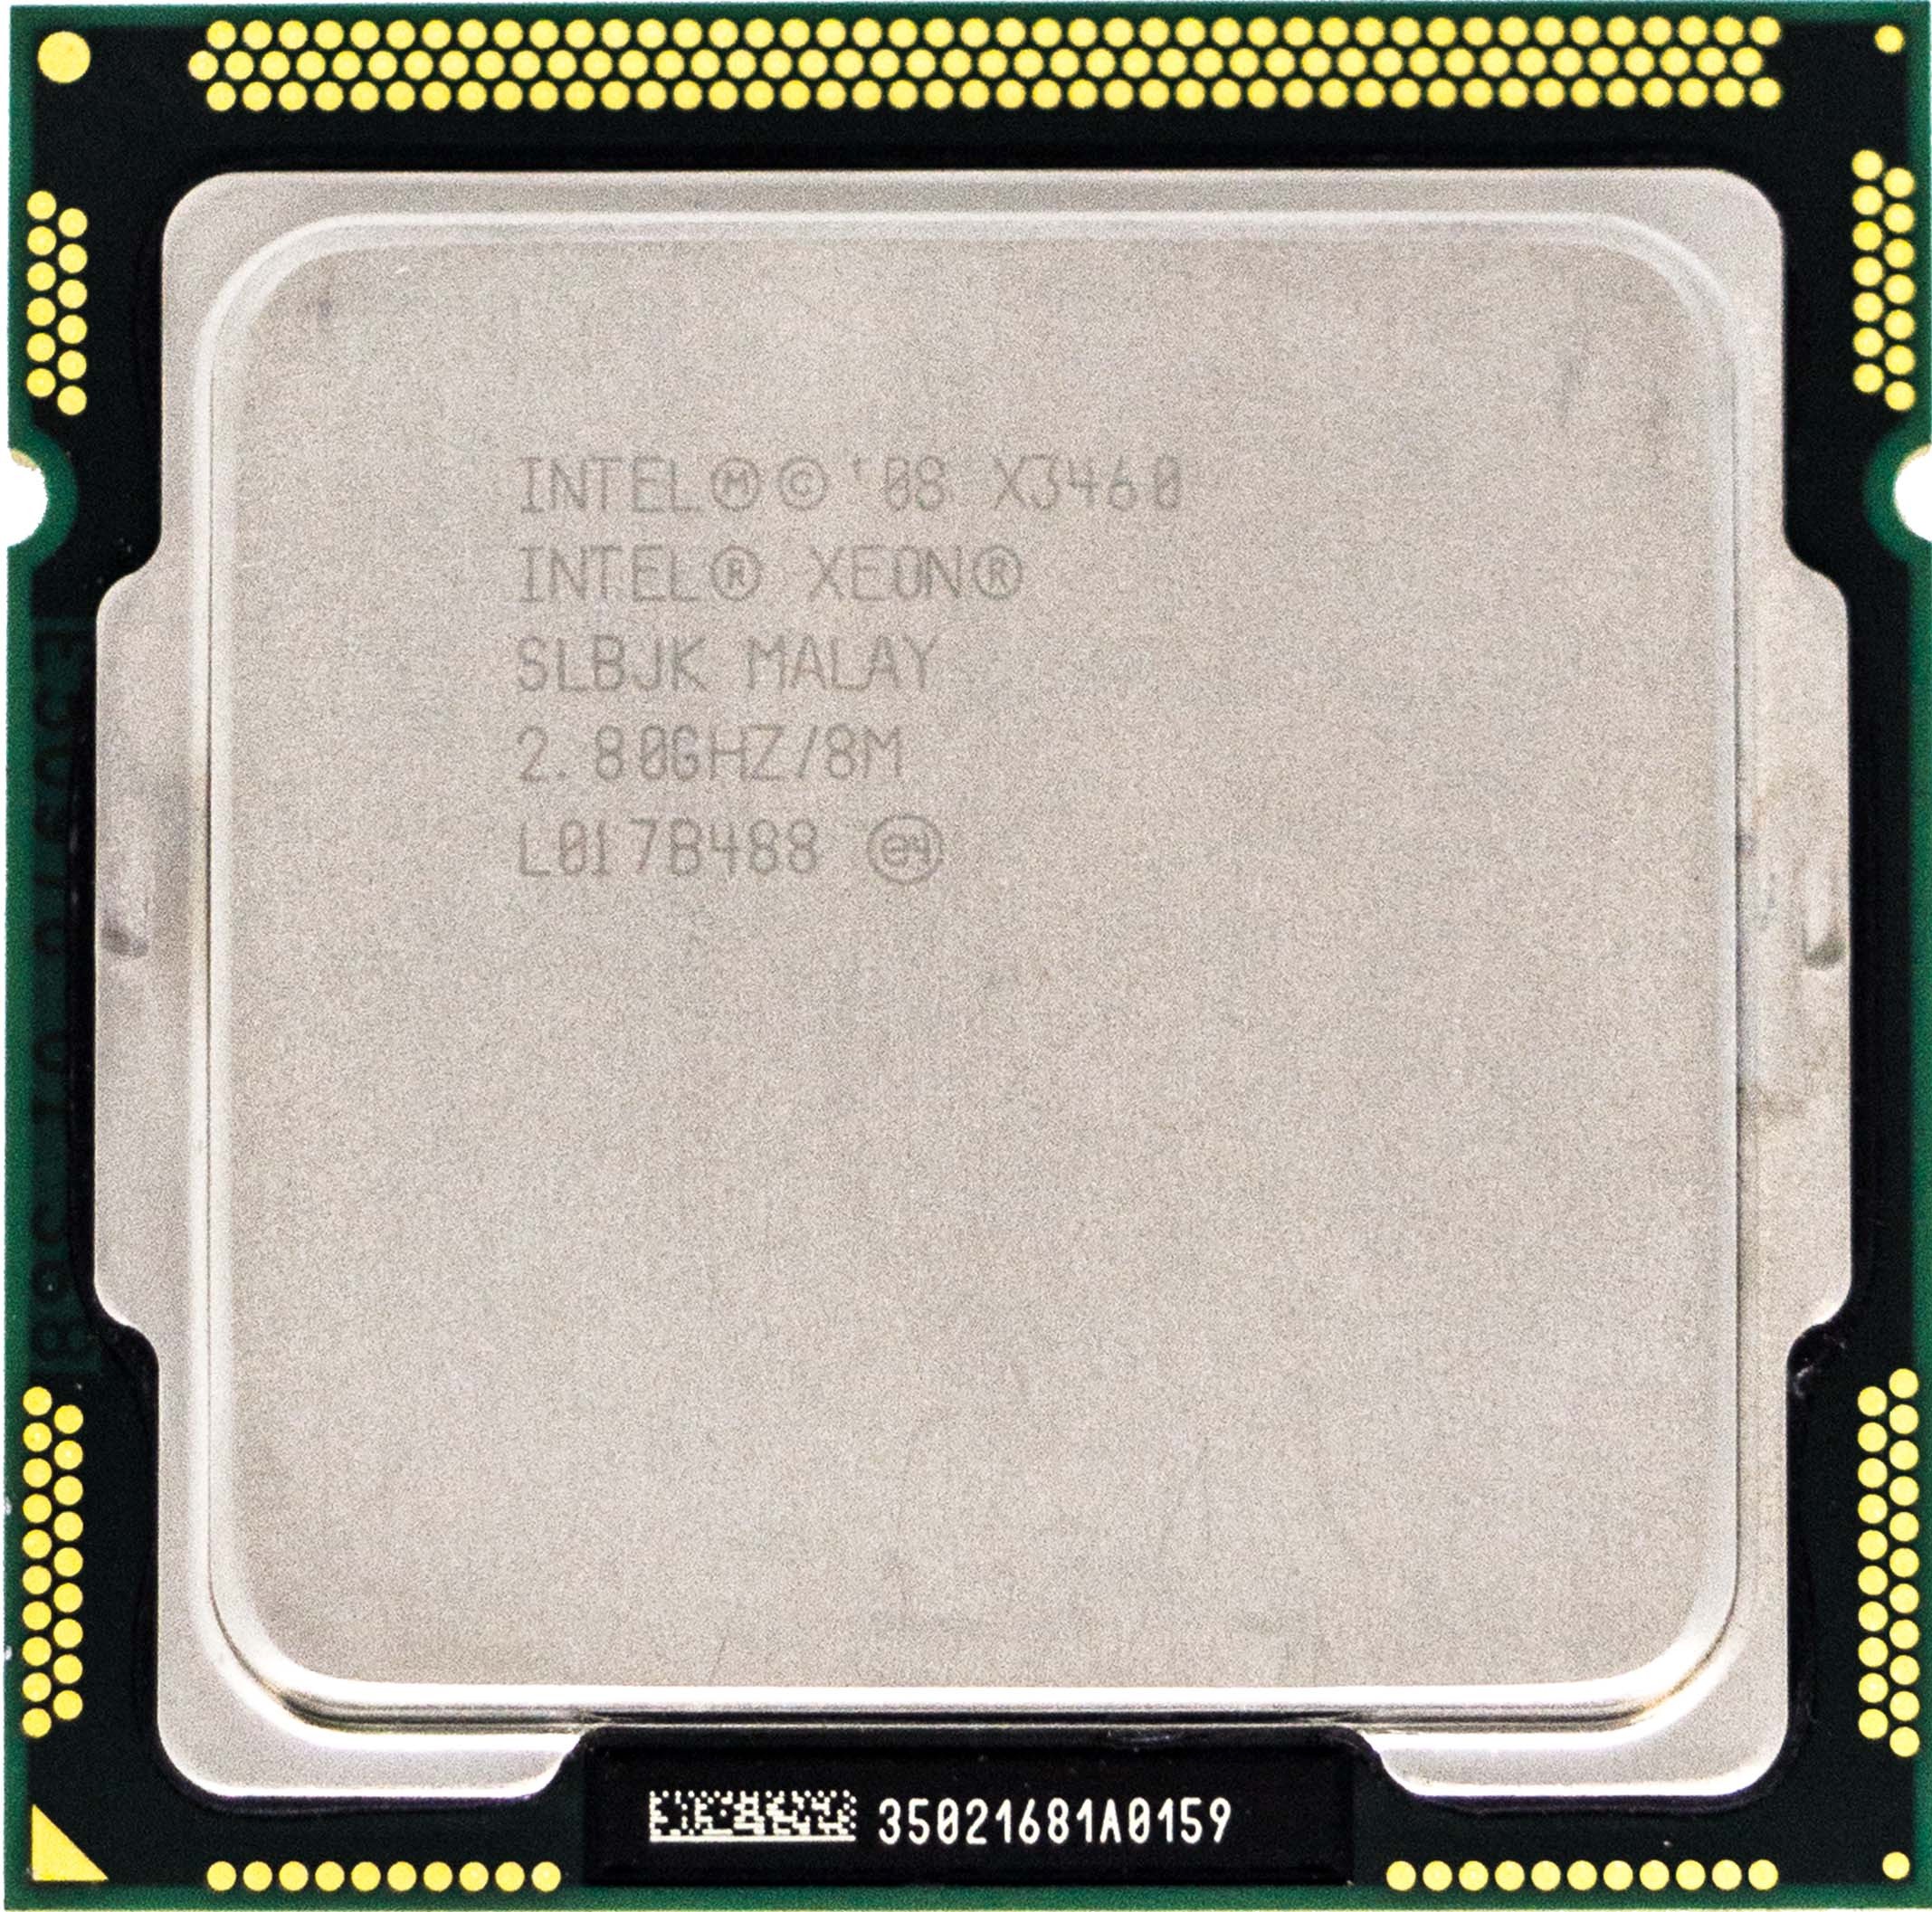 Intel Xeon X3460 (SLBJK) 2.80Ghz Quad (4) Core LGA1156 98W CPU